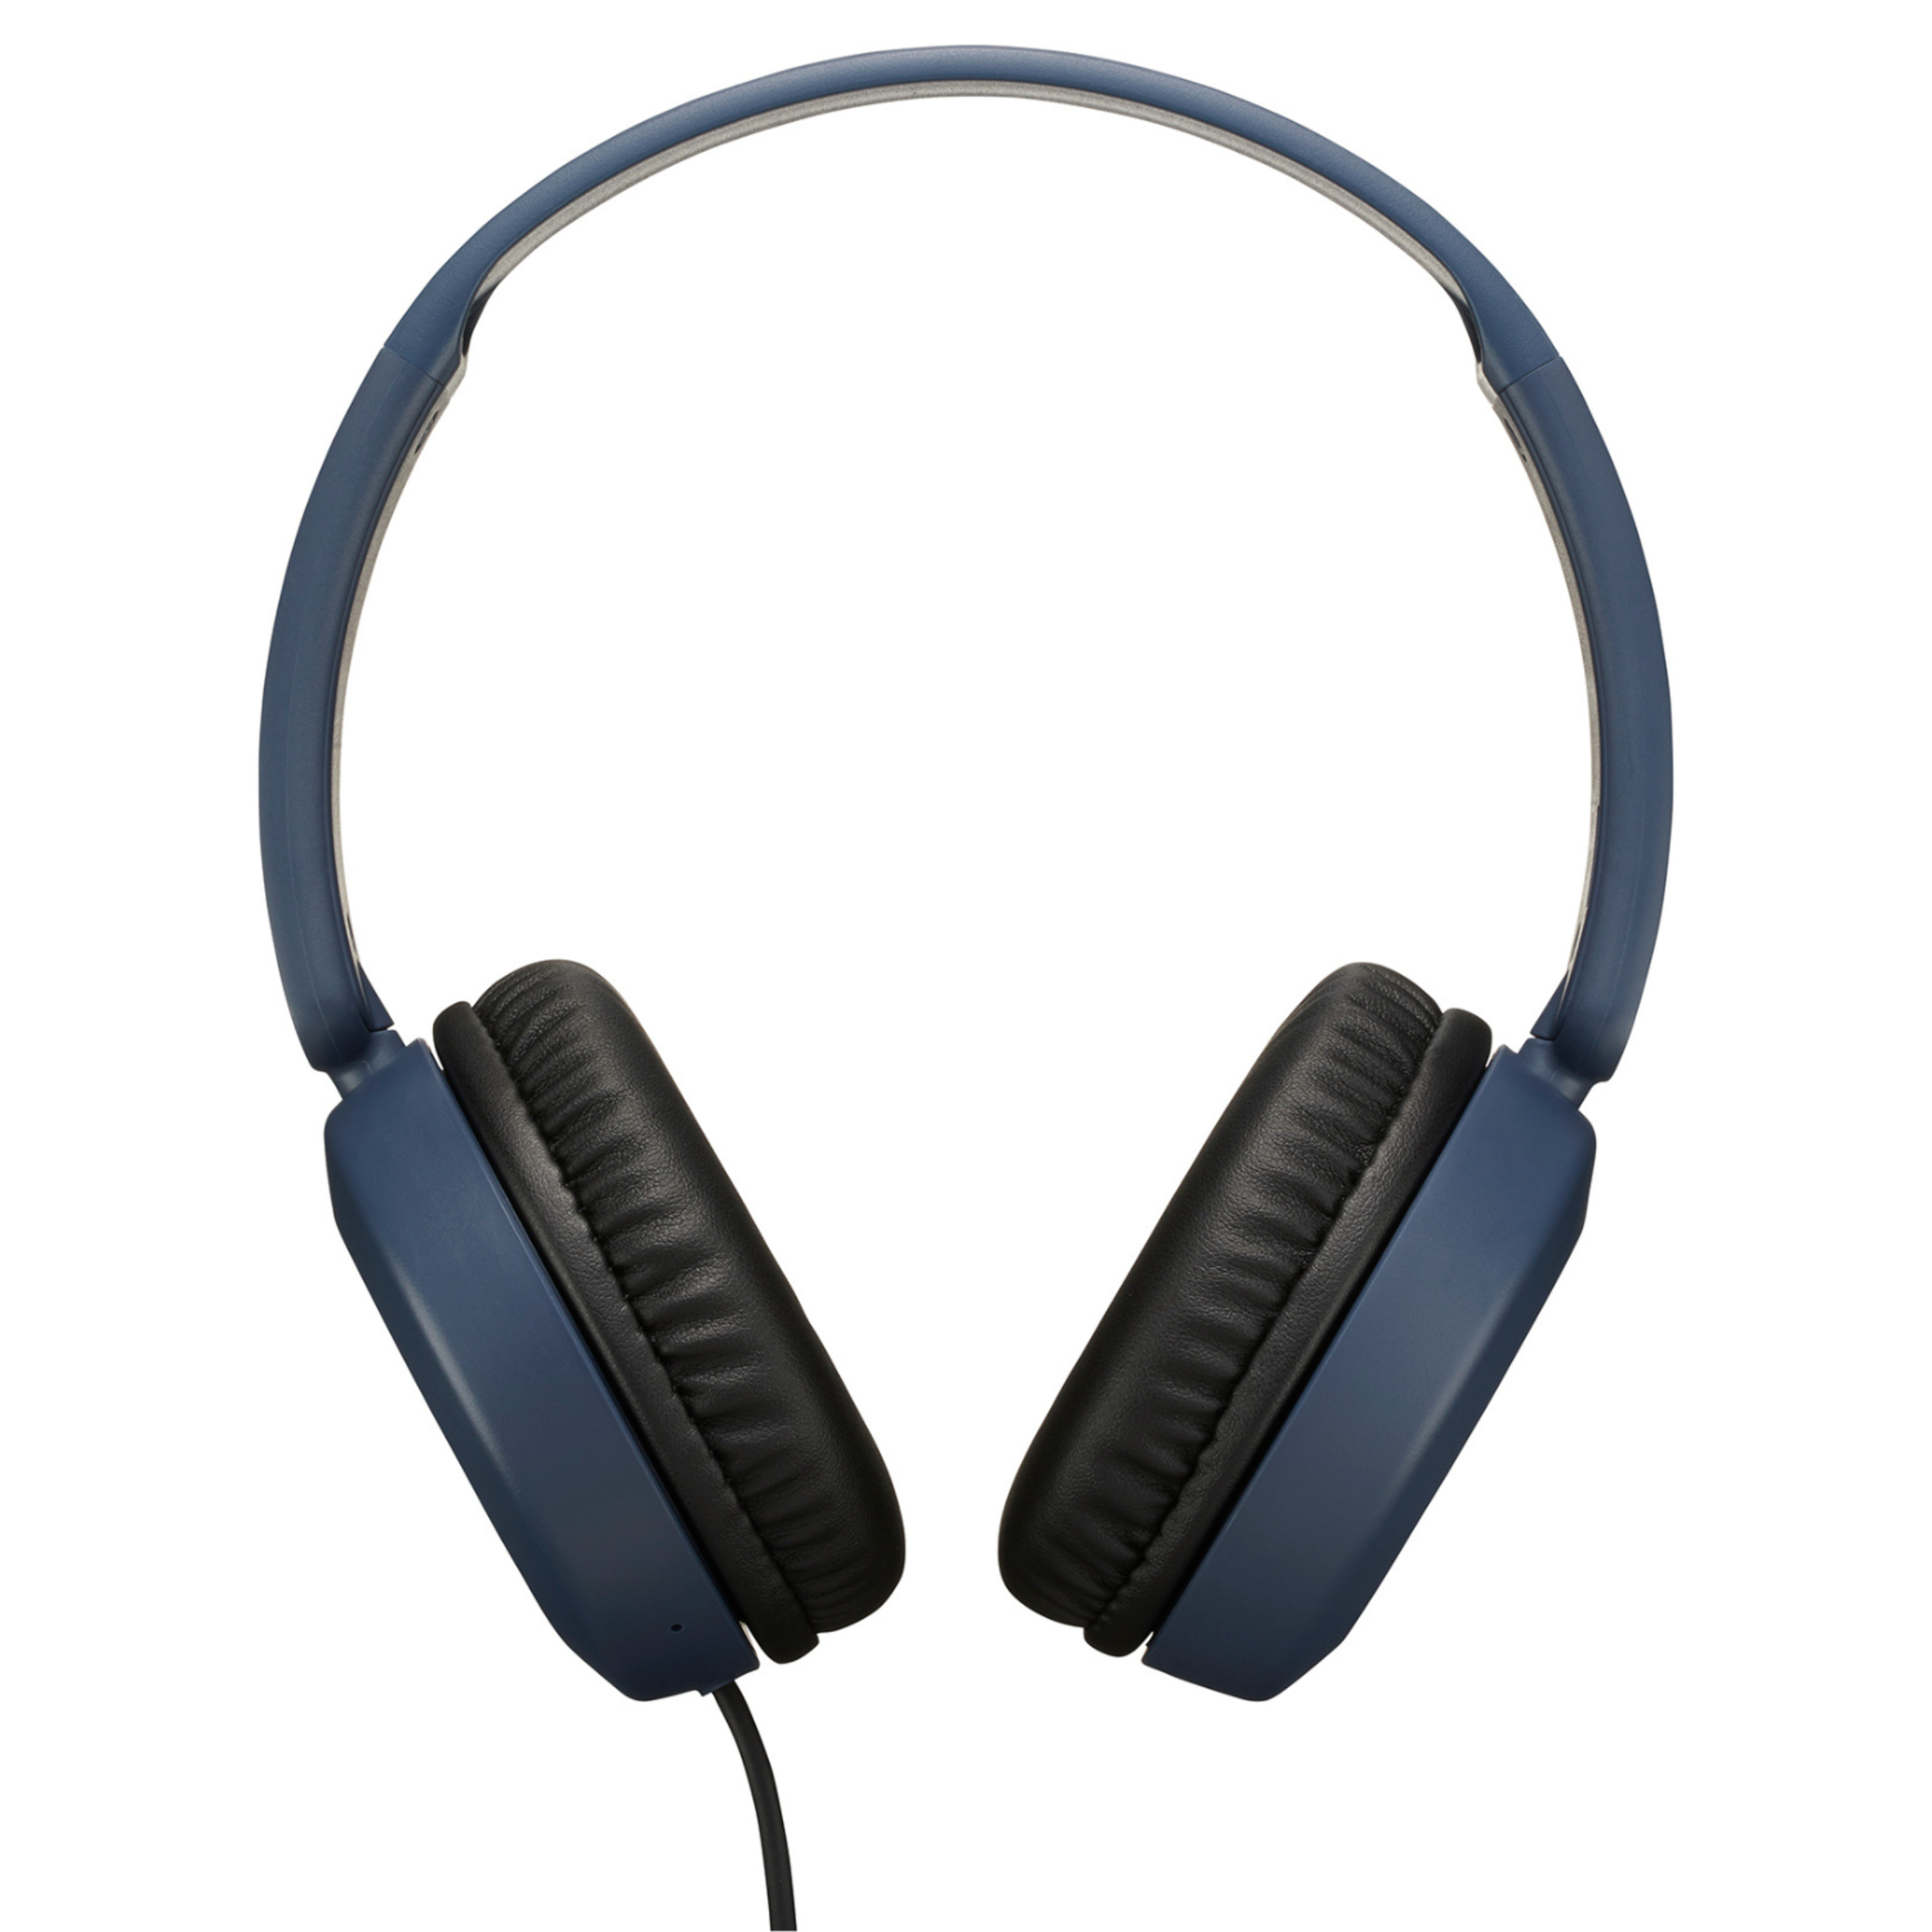 Headphones Com Fio Jvc Ha-s31m-a-ex - Azul | Sport Zone MKP